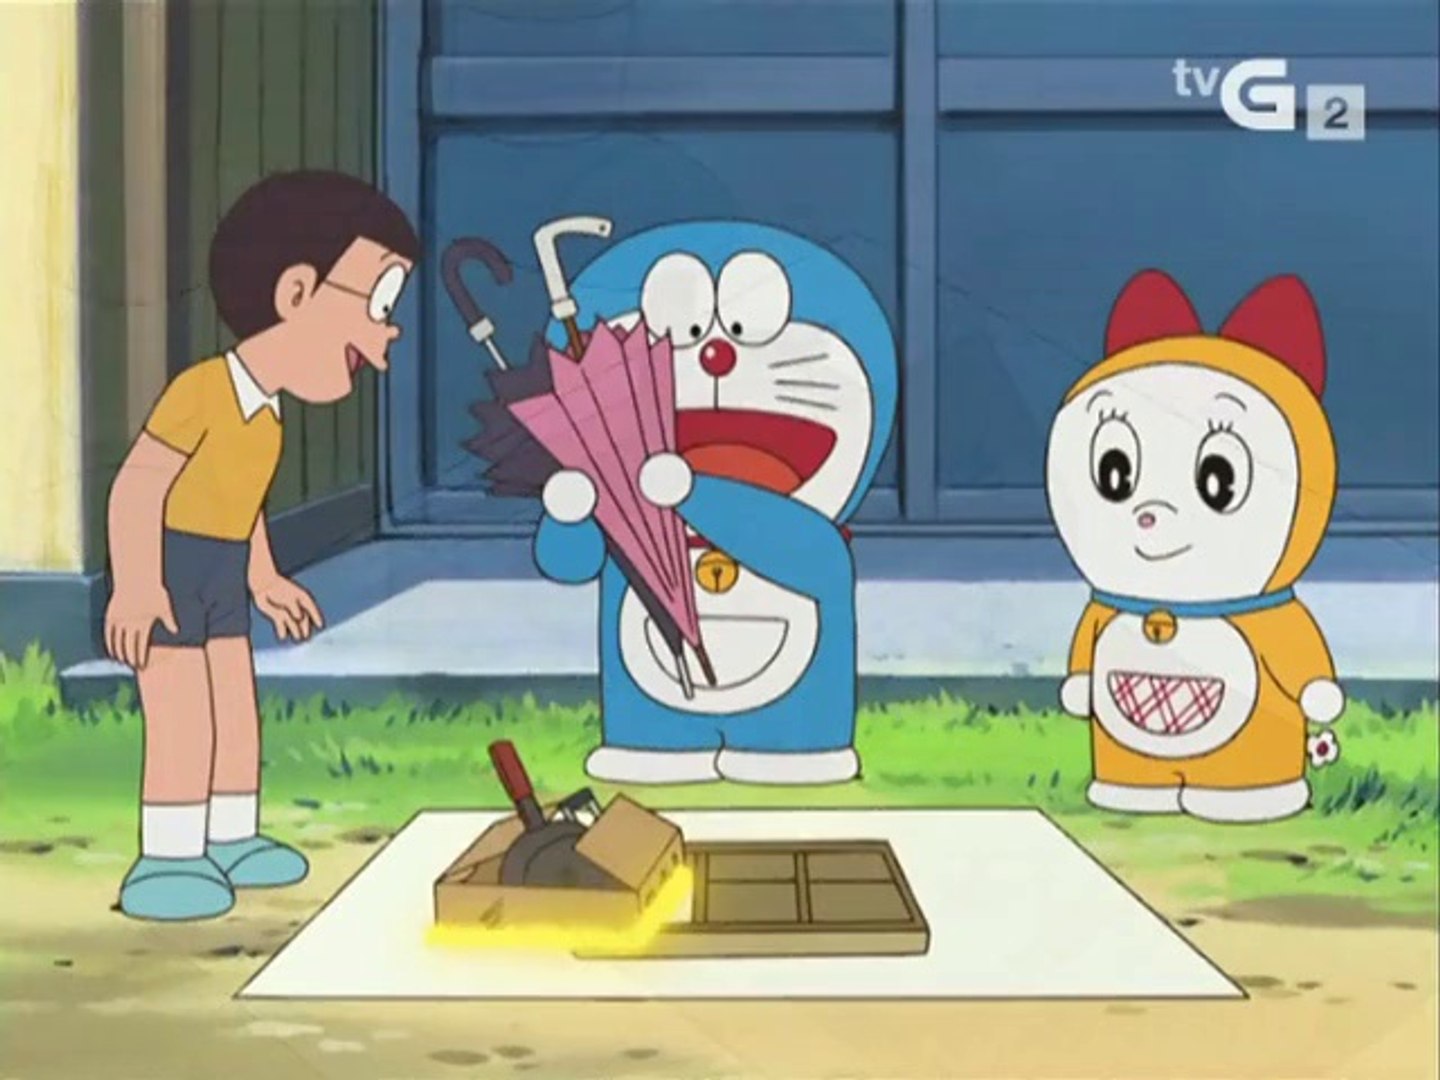 Doraemon - Papel absorbente - Vídeo Dailymotion